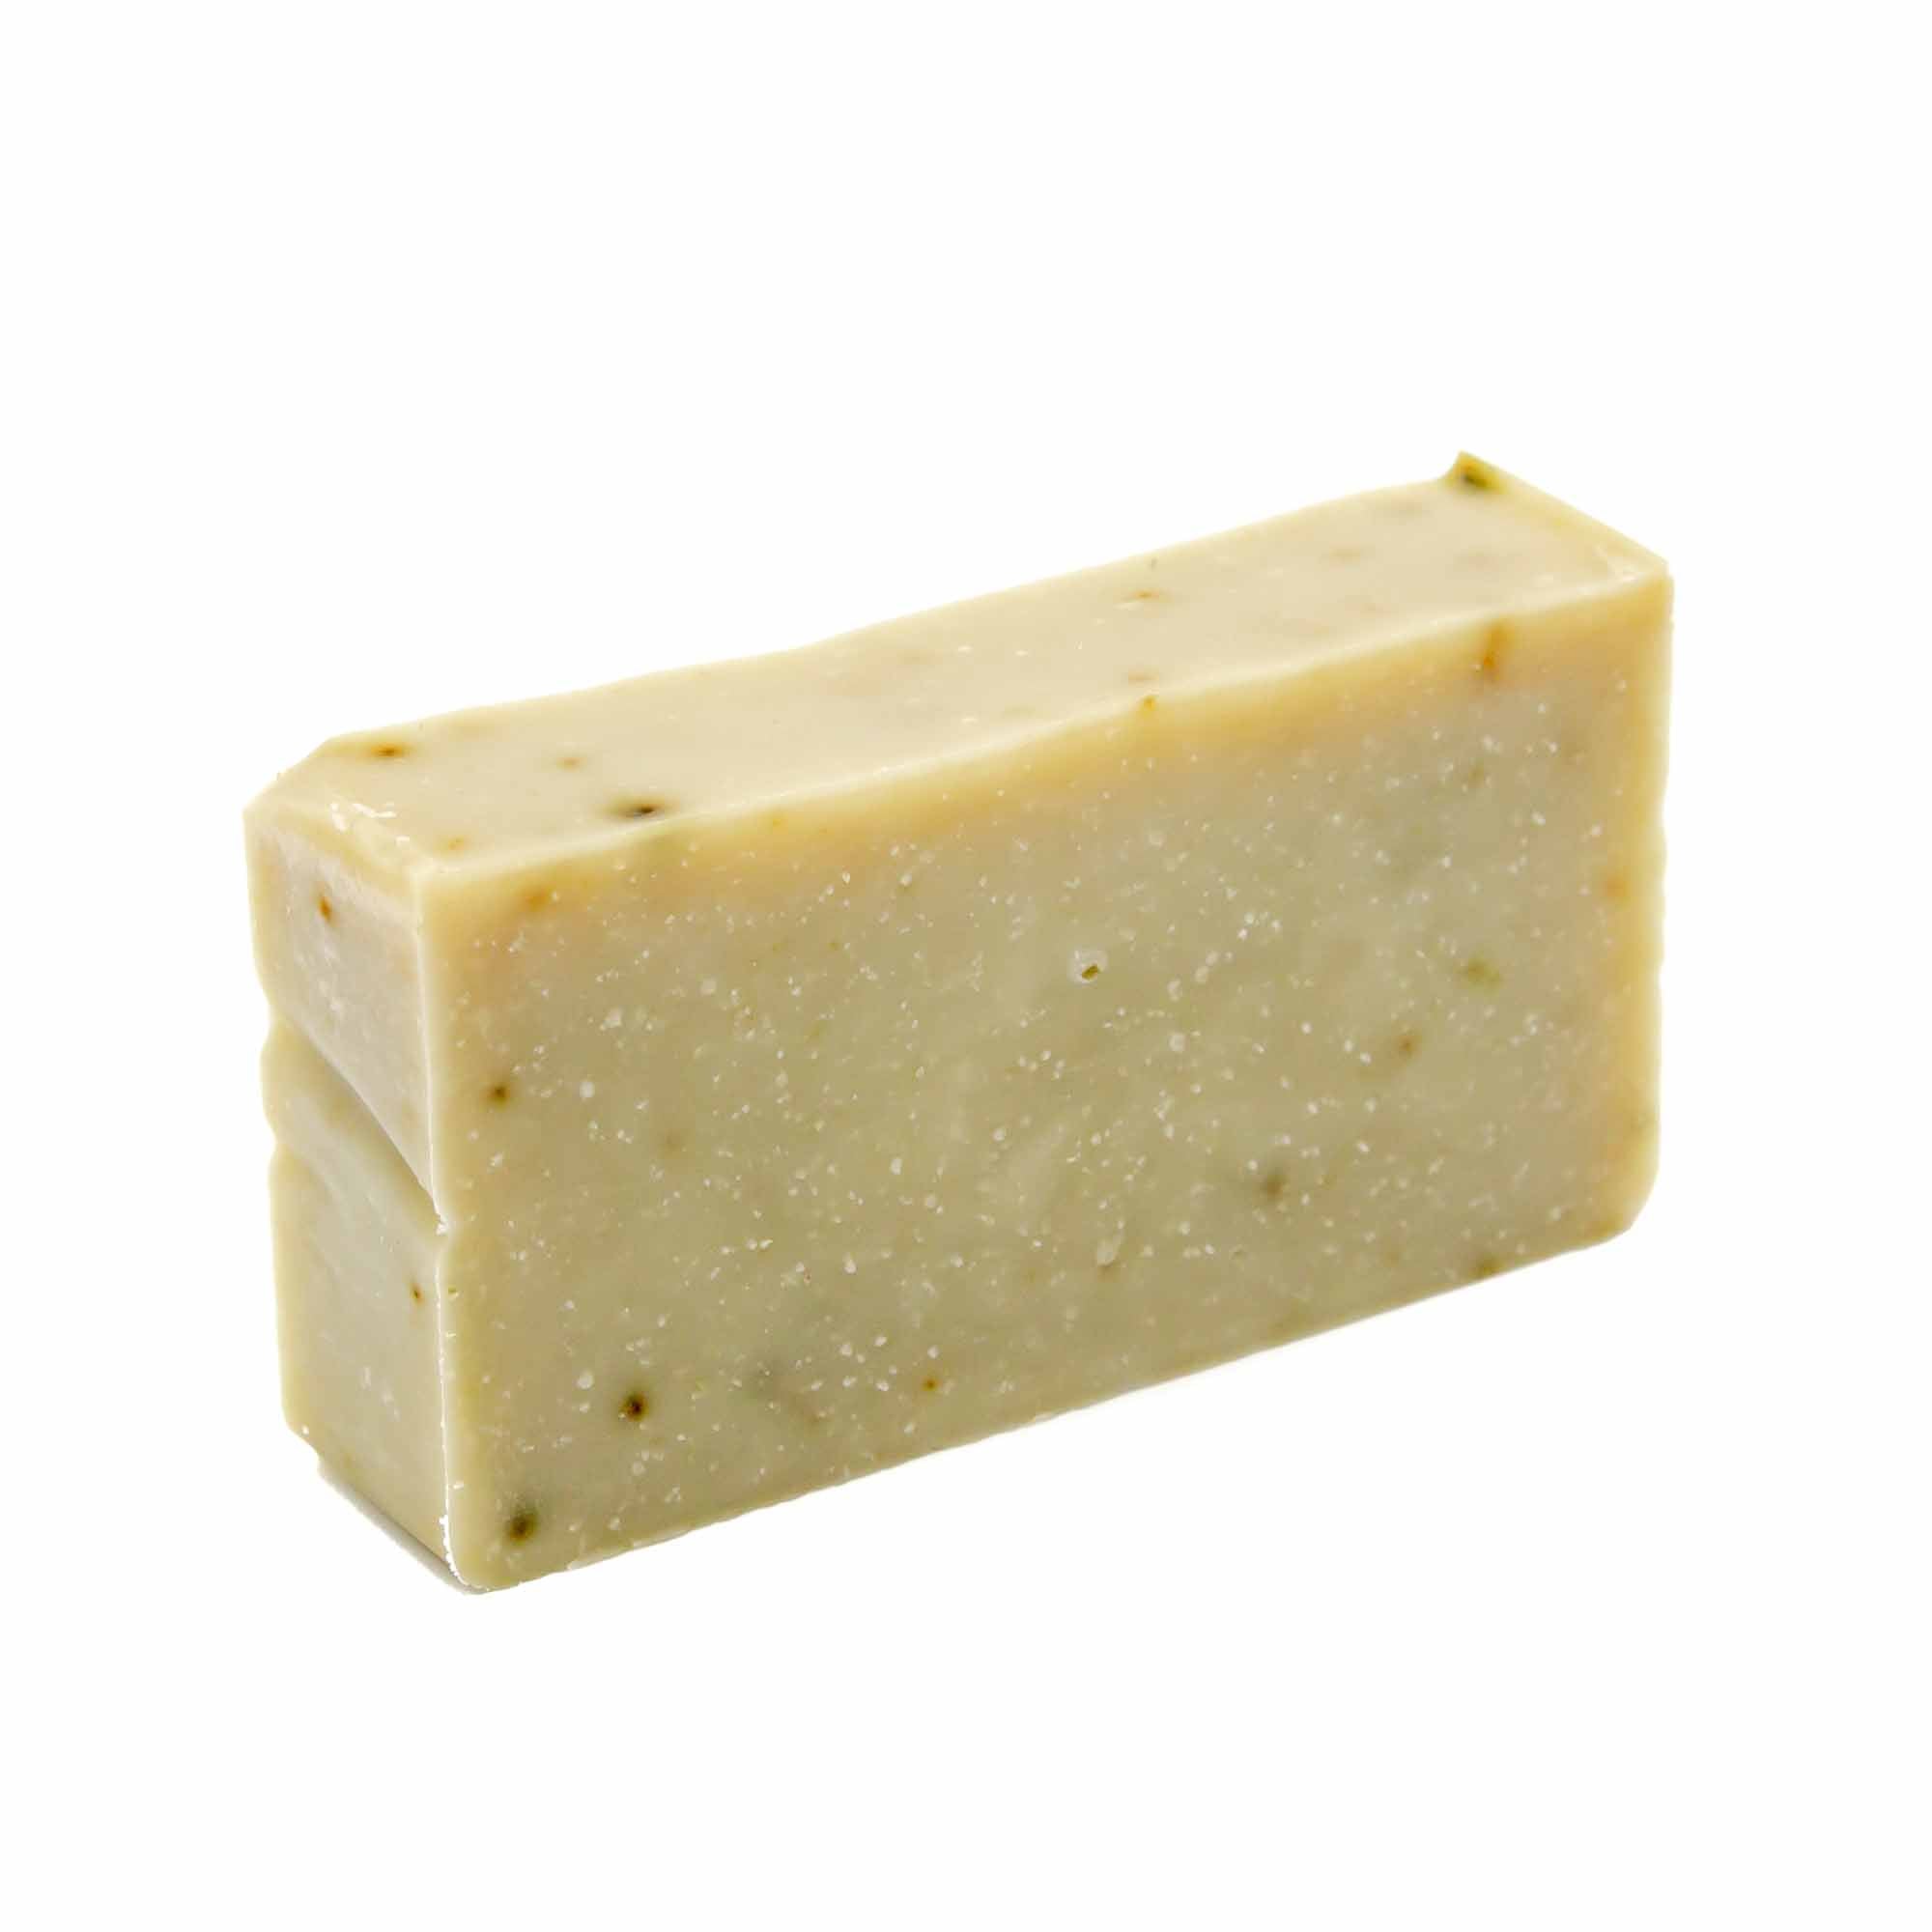 welliver goods - hemp & aloe bar soap - Mortise And Tenon